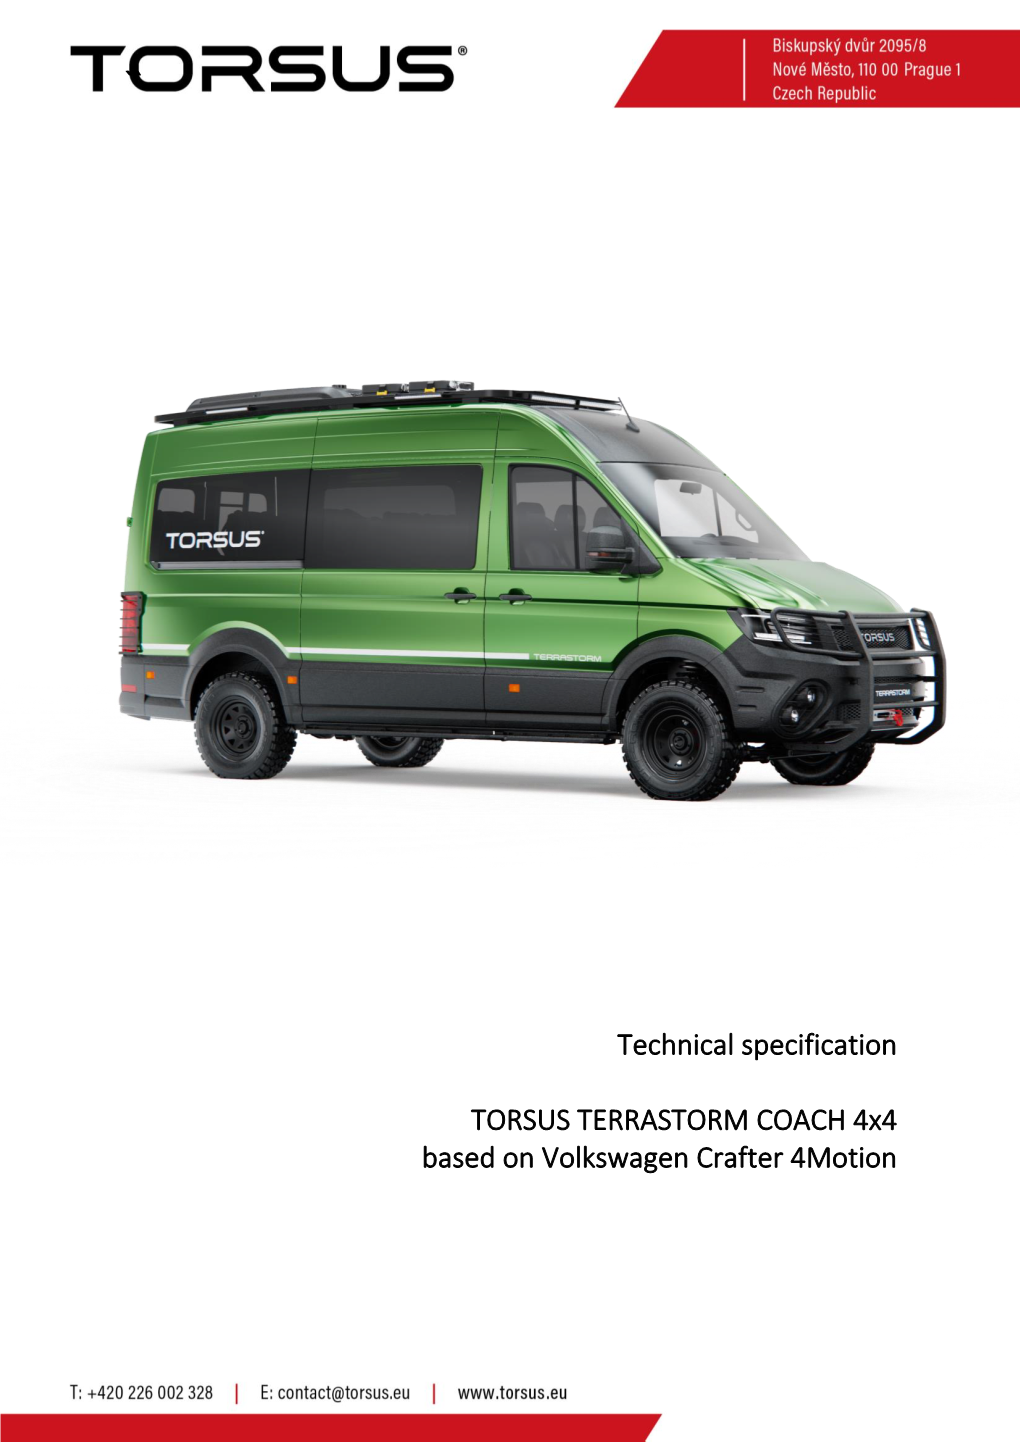 `` Technical Specification TORSUS TERRASTORM COACH 4X4 Based on Volkswagen Crafter 4Motion